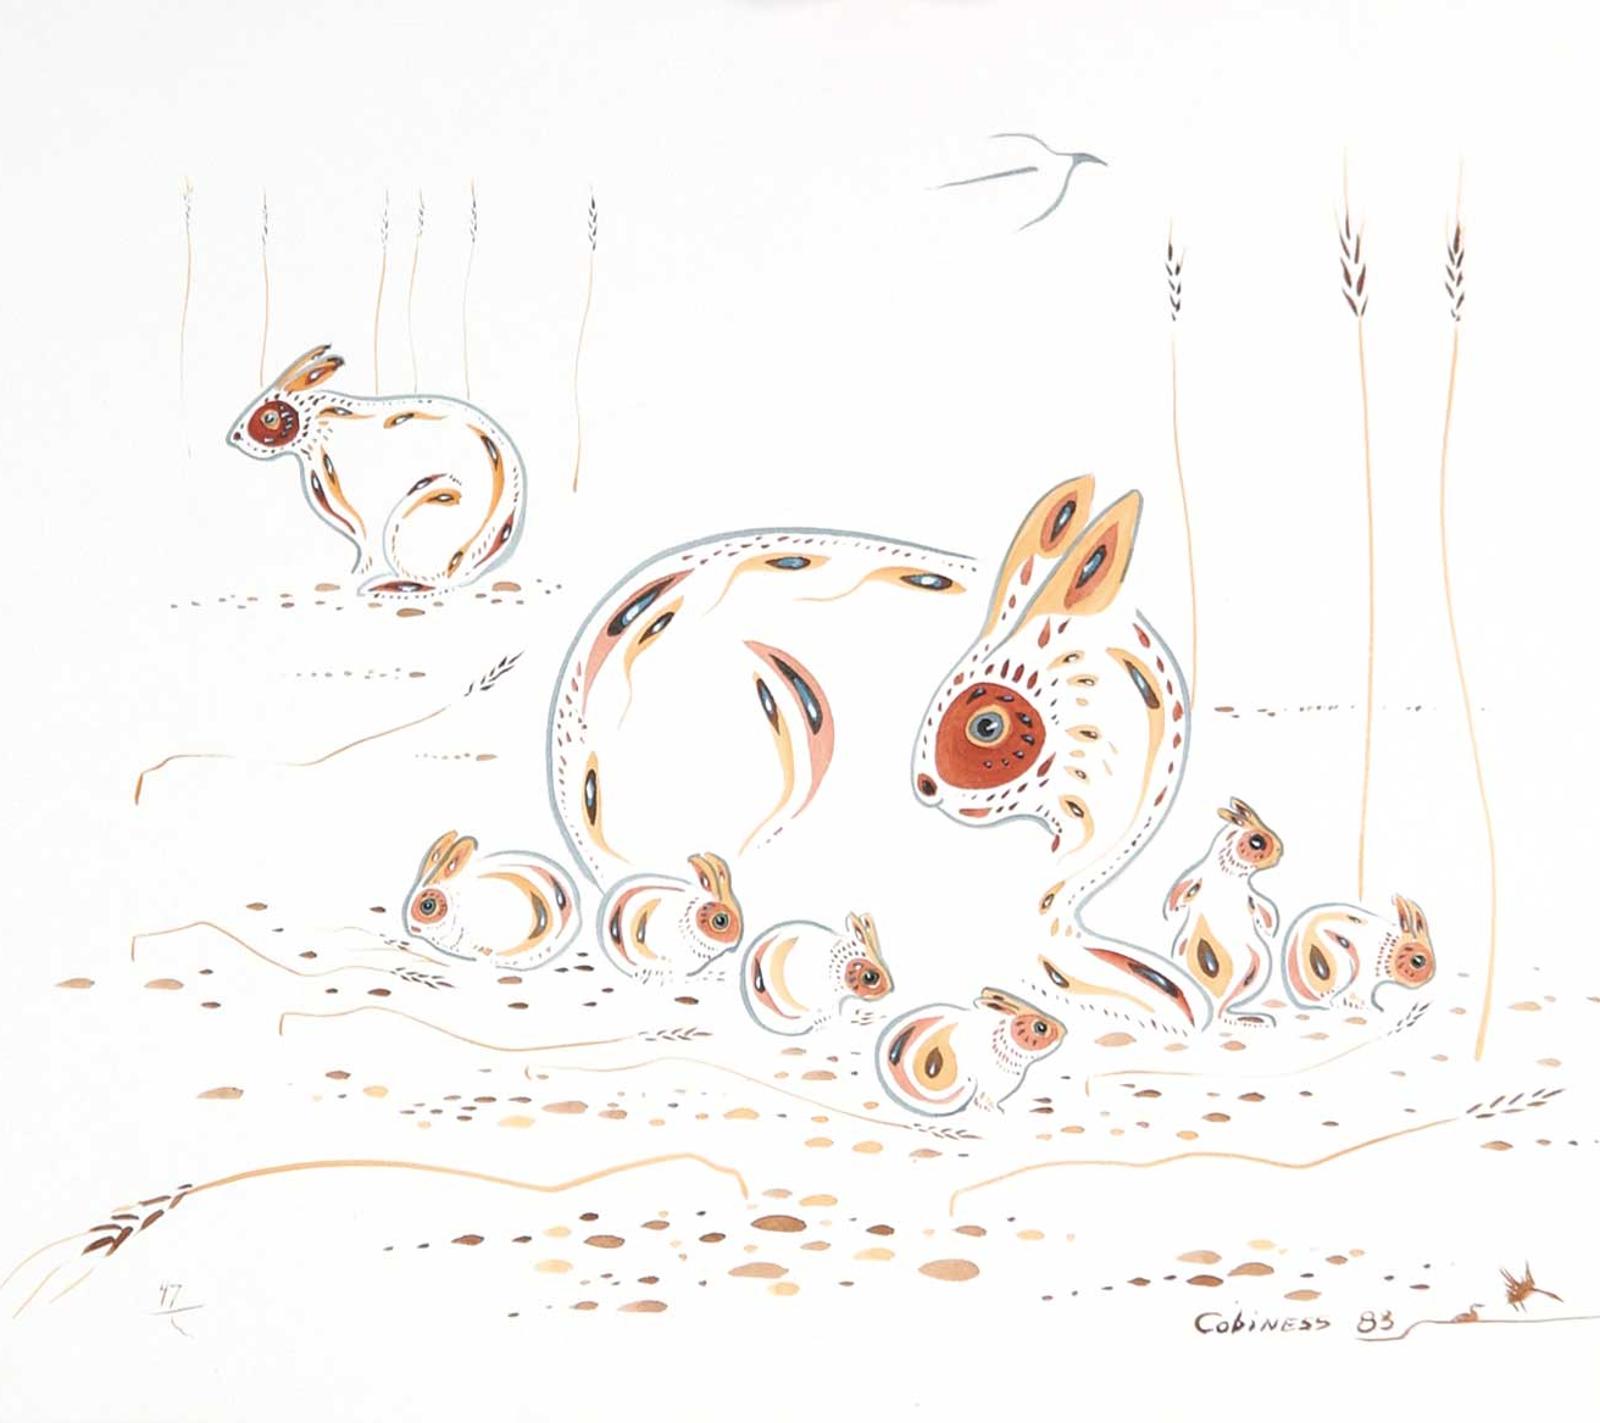 Edward [Eddy] Cobiness (1933-1996) - Untitled - Bunny Family